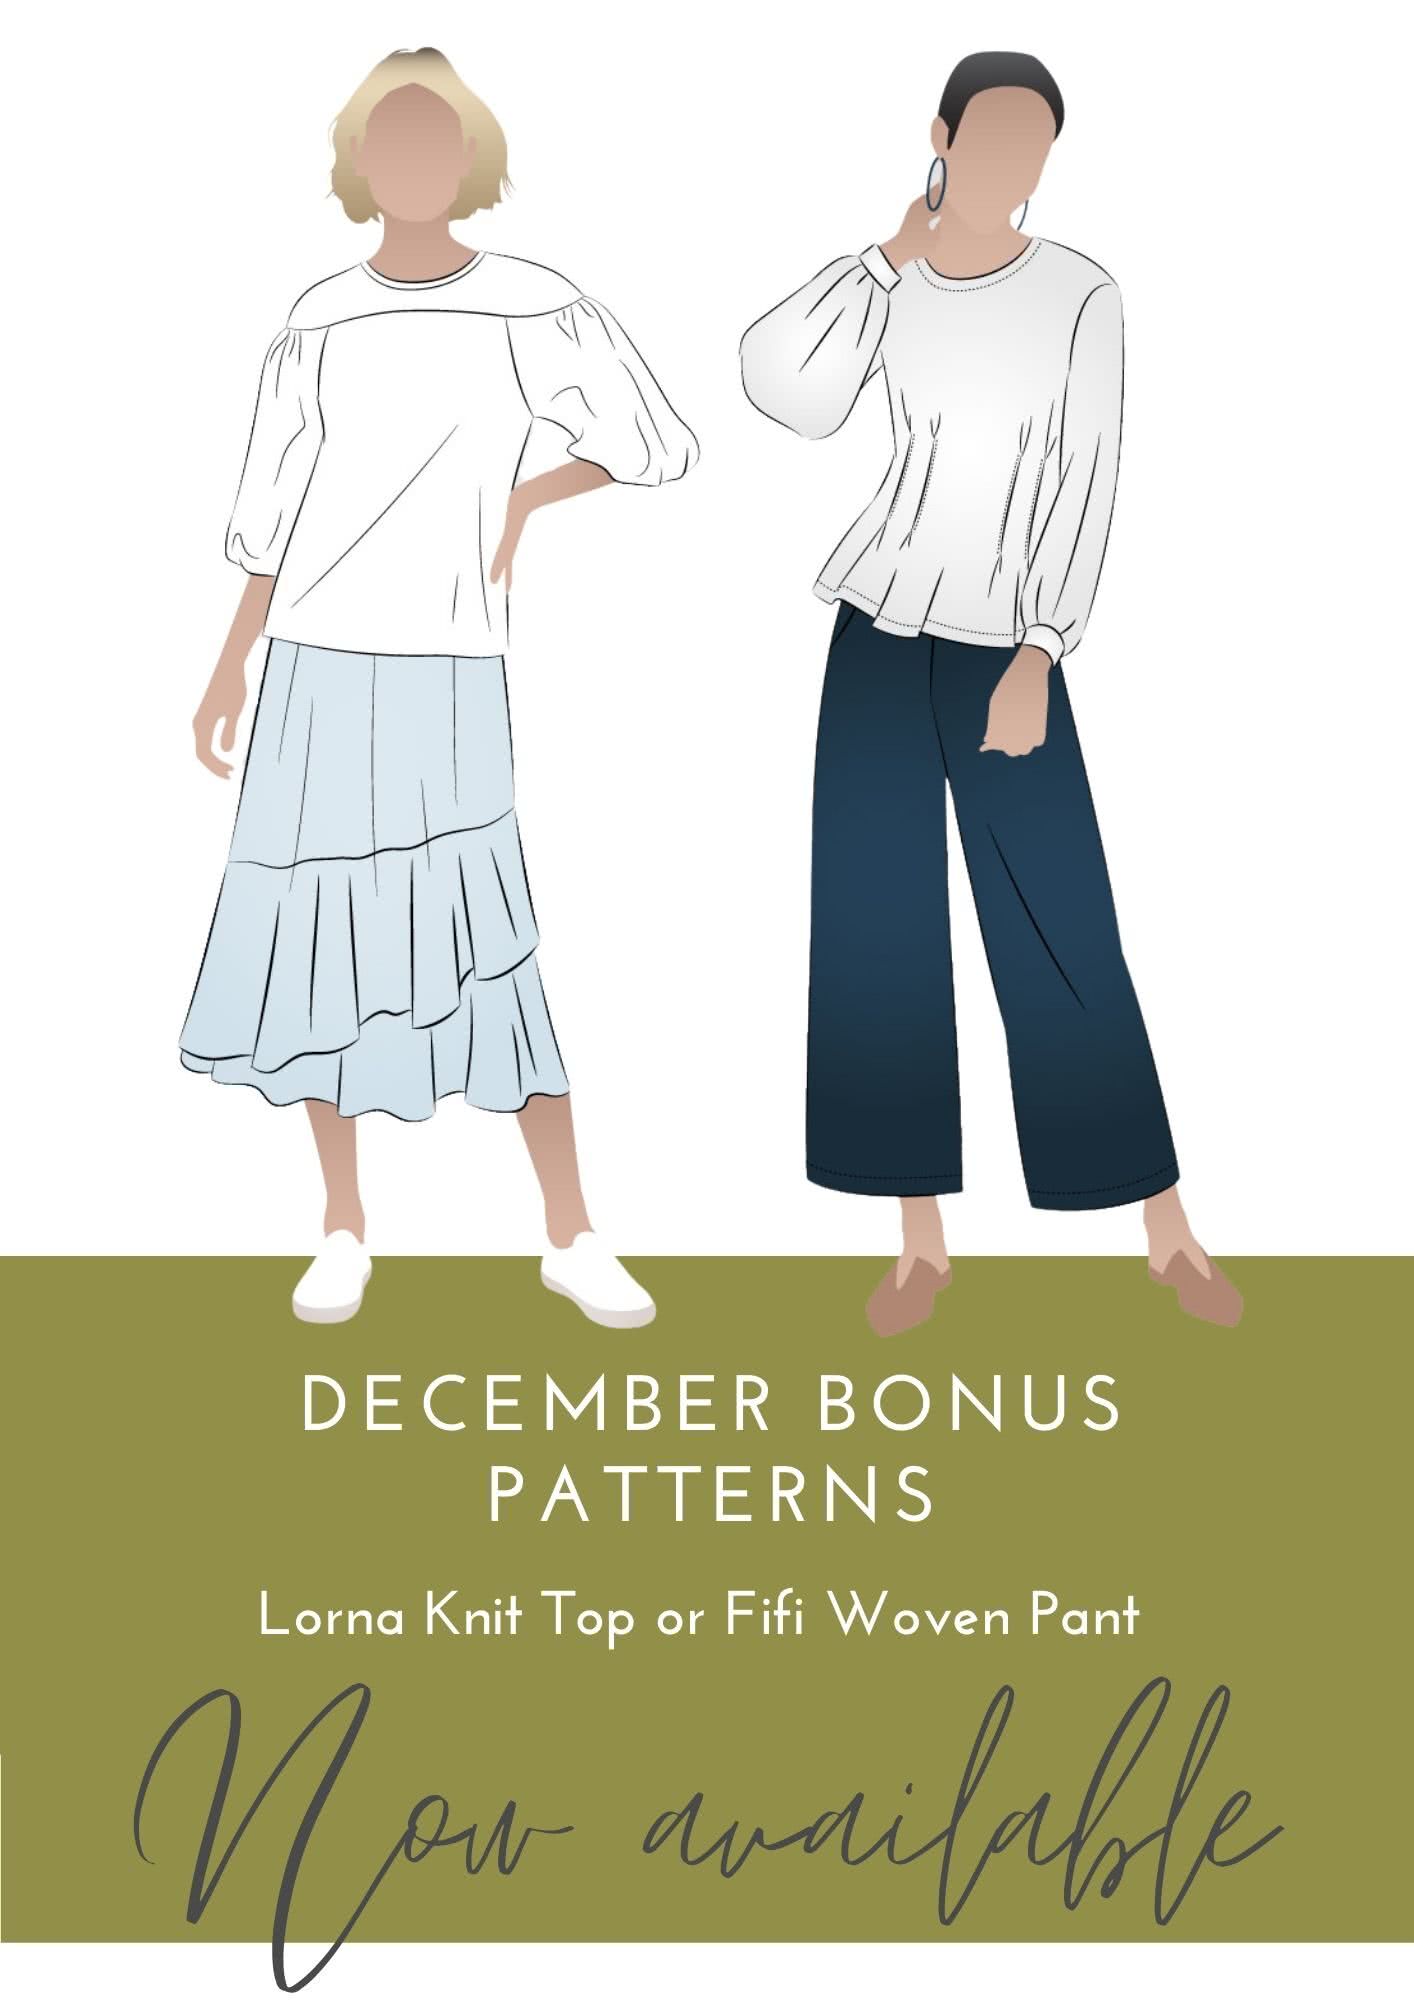 Lorna Knit Top & Fifi Woven Pant - Style Arc's December Bonus Patterns 